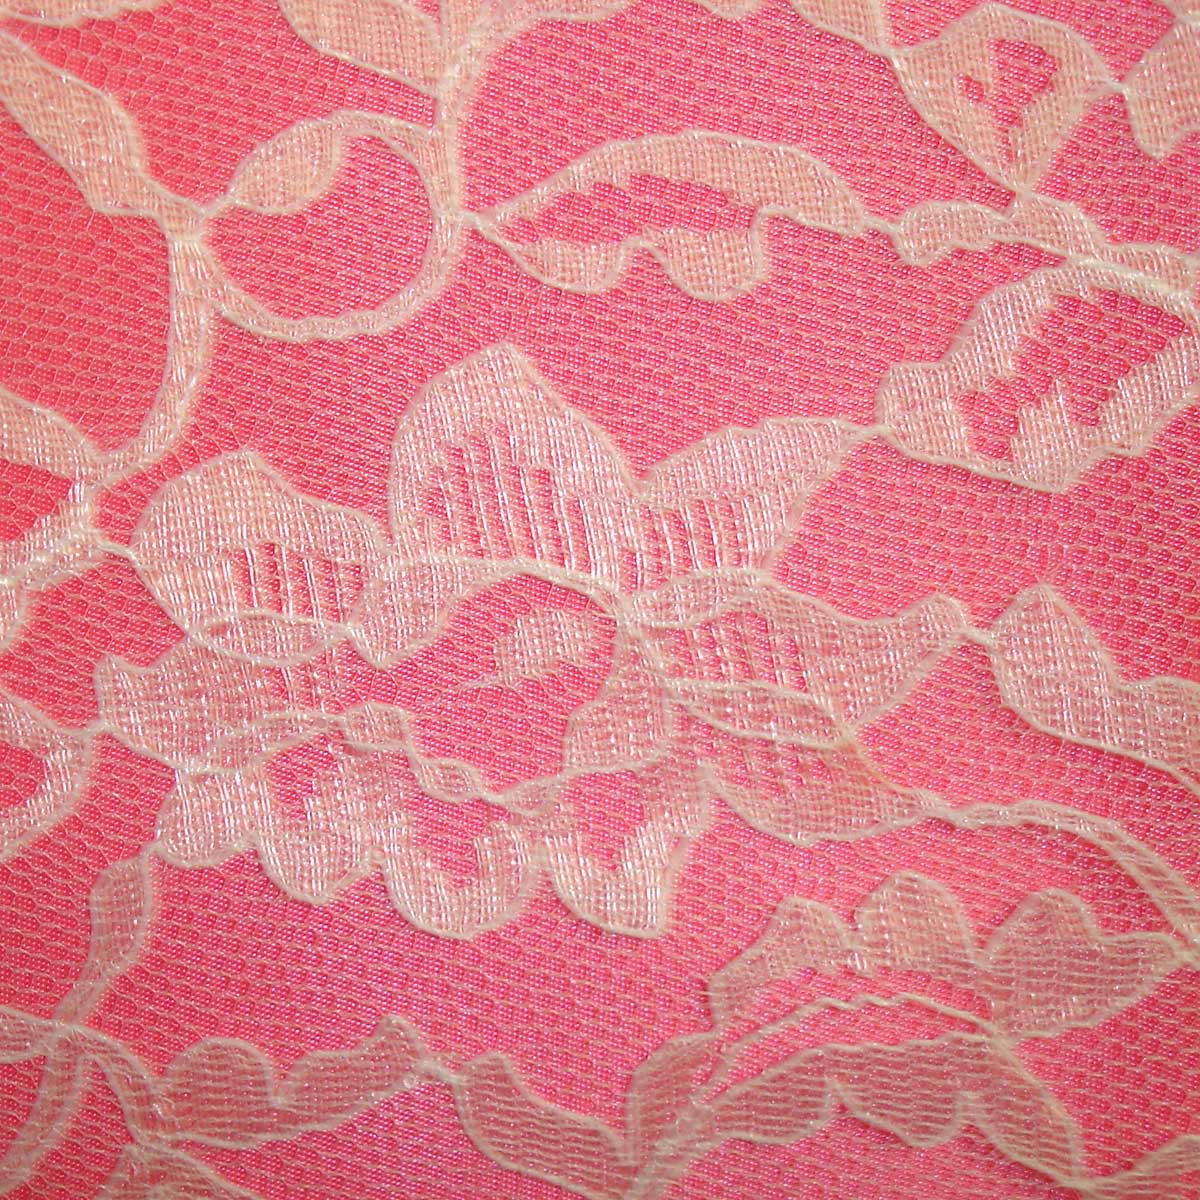 Hot Pink Lace Wallpaper Pale